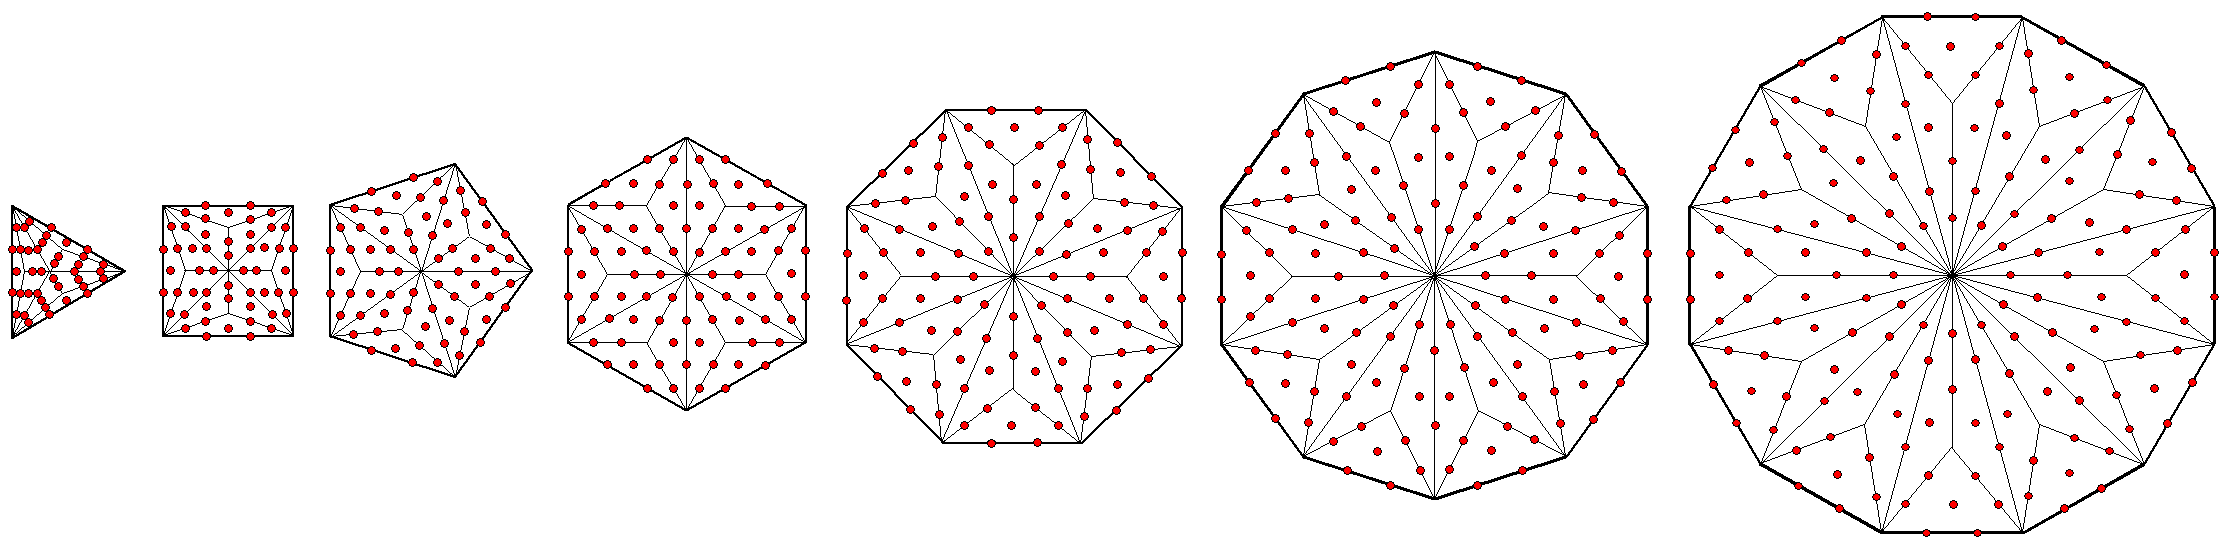 624 hexagonal yods in 7 Type B polygons